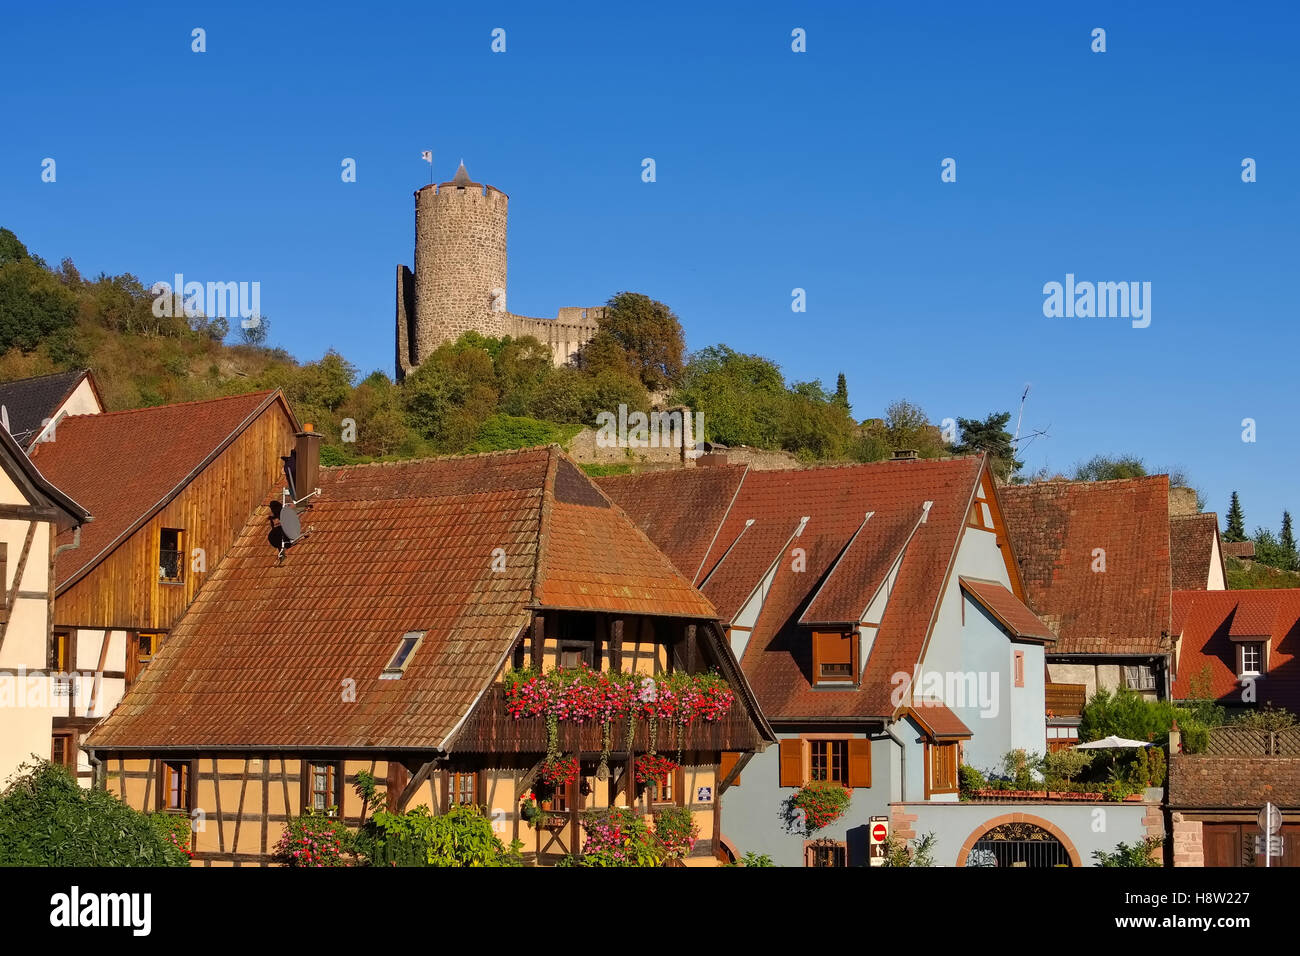 Stadtansicht Kaysersberg Im Elsass, Frankreich - Stadtbild Kaysersberg, Elsass in Frankreich Stockfoto